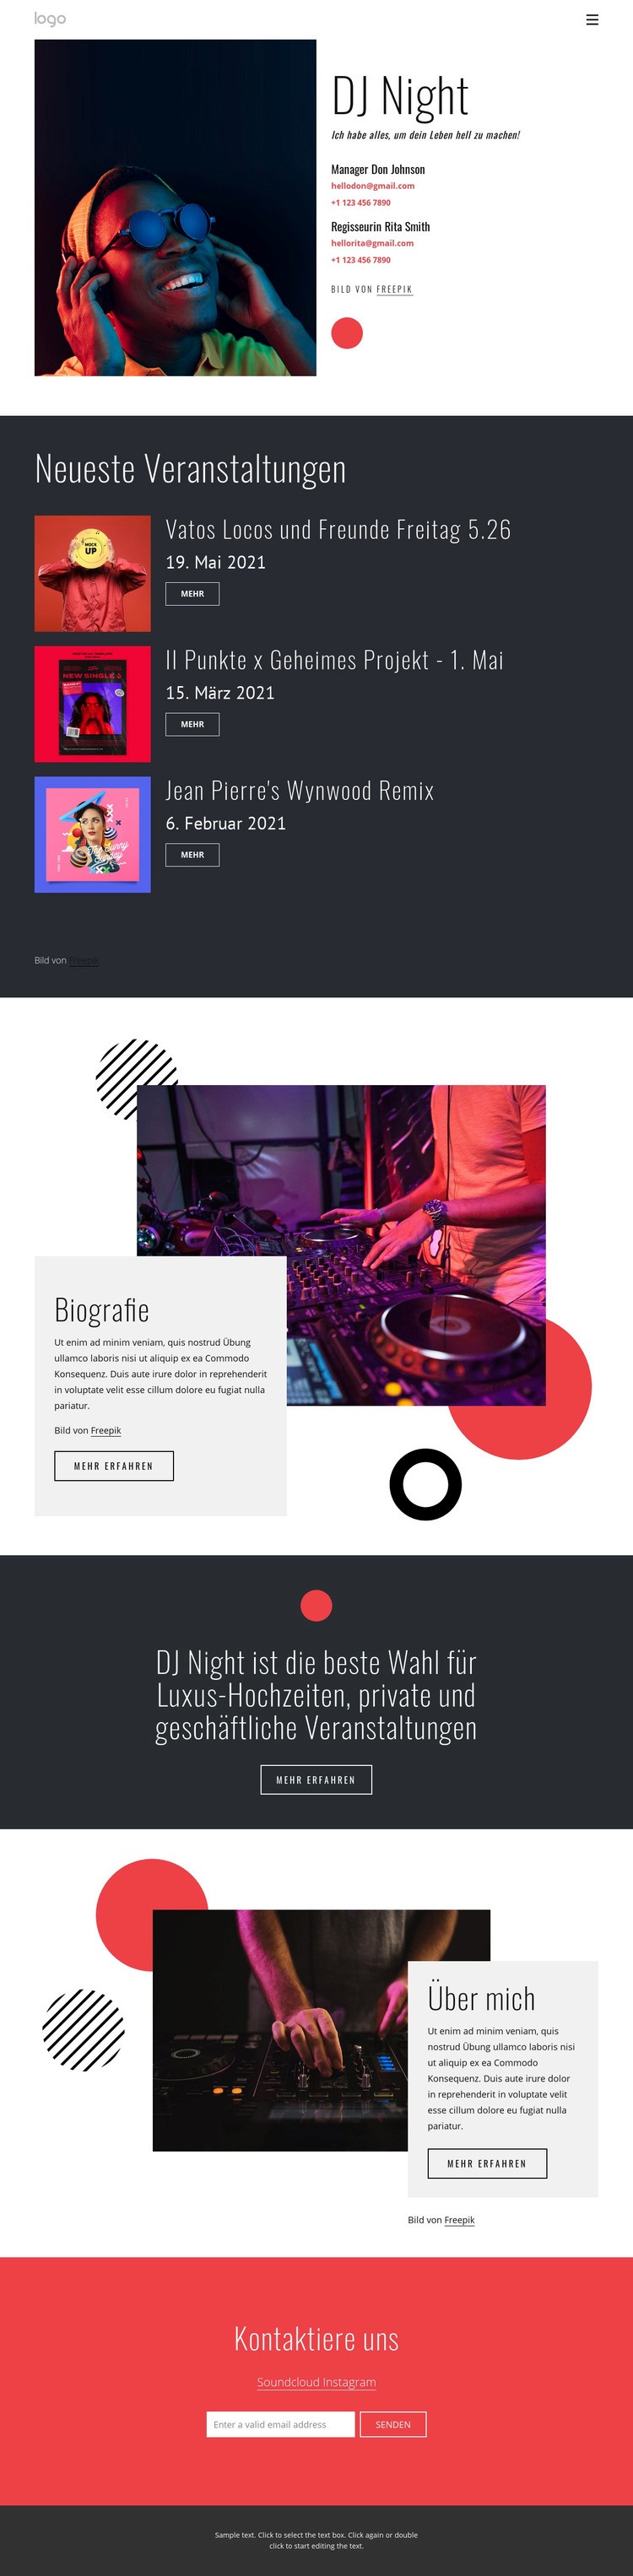 DJ Nacht Website Landing Page